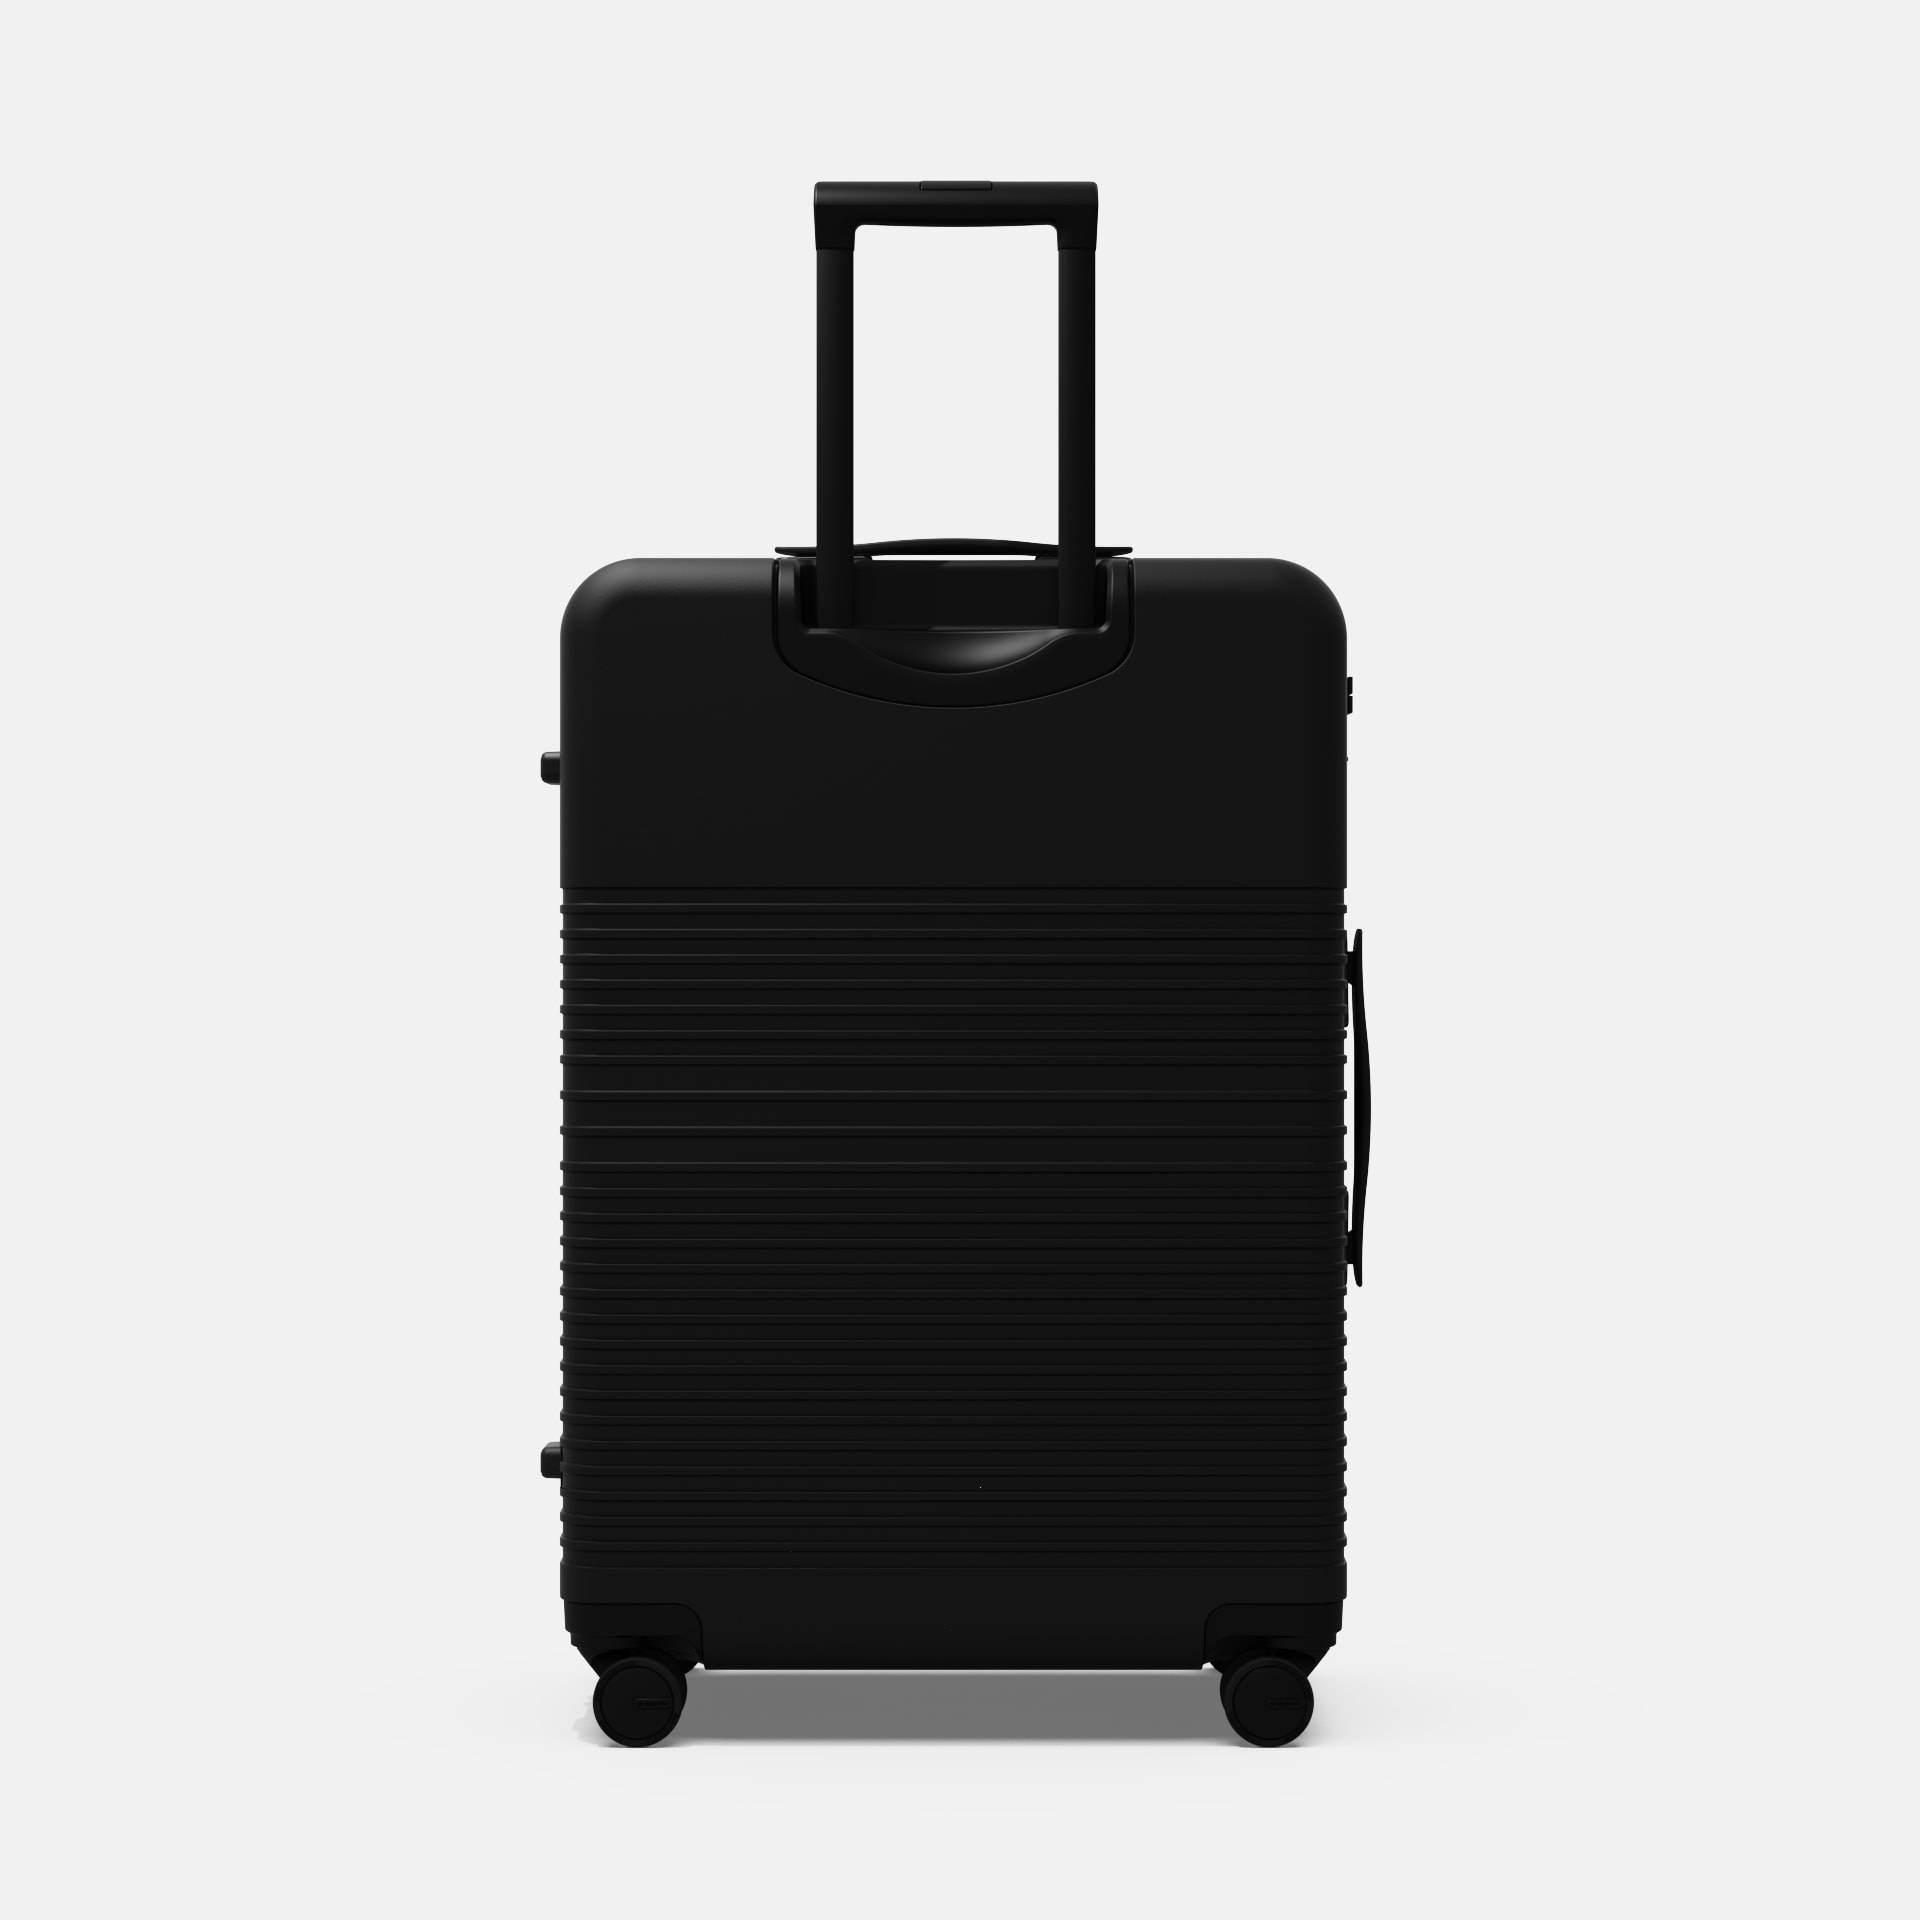 Nortvi check-in suitcase black